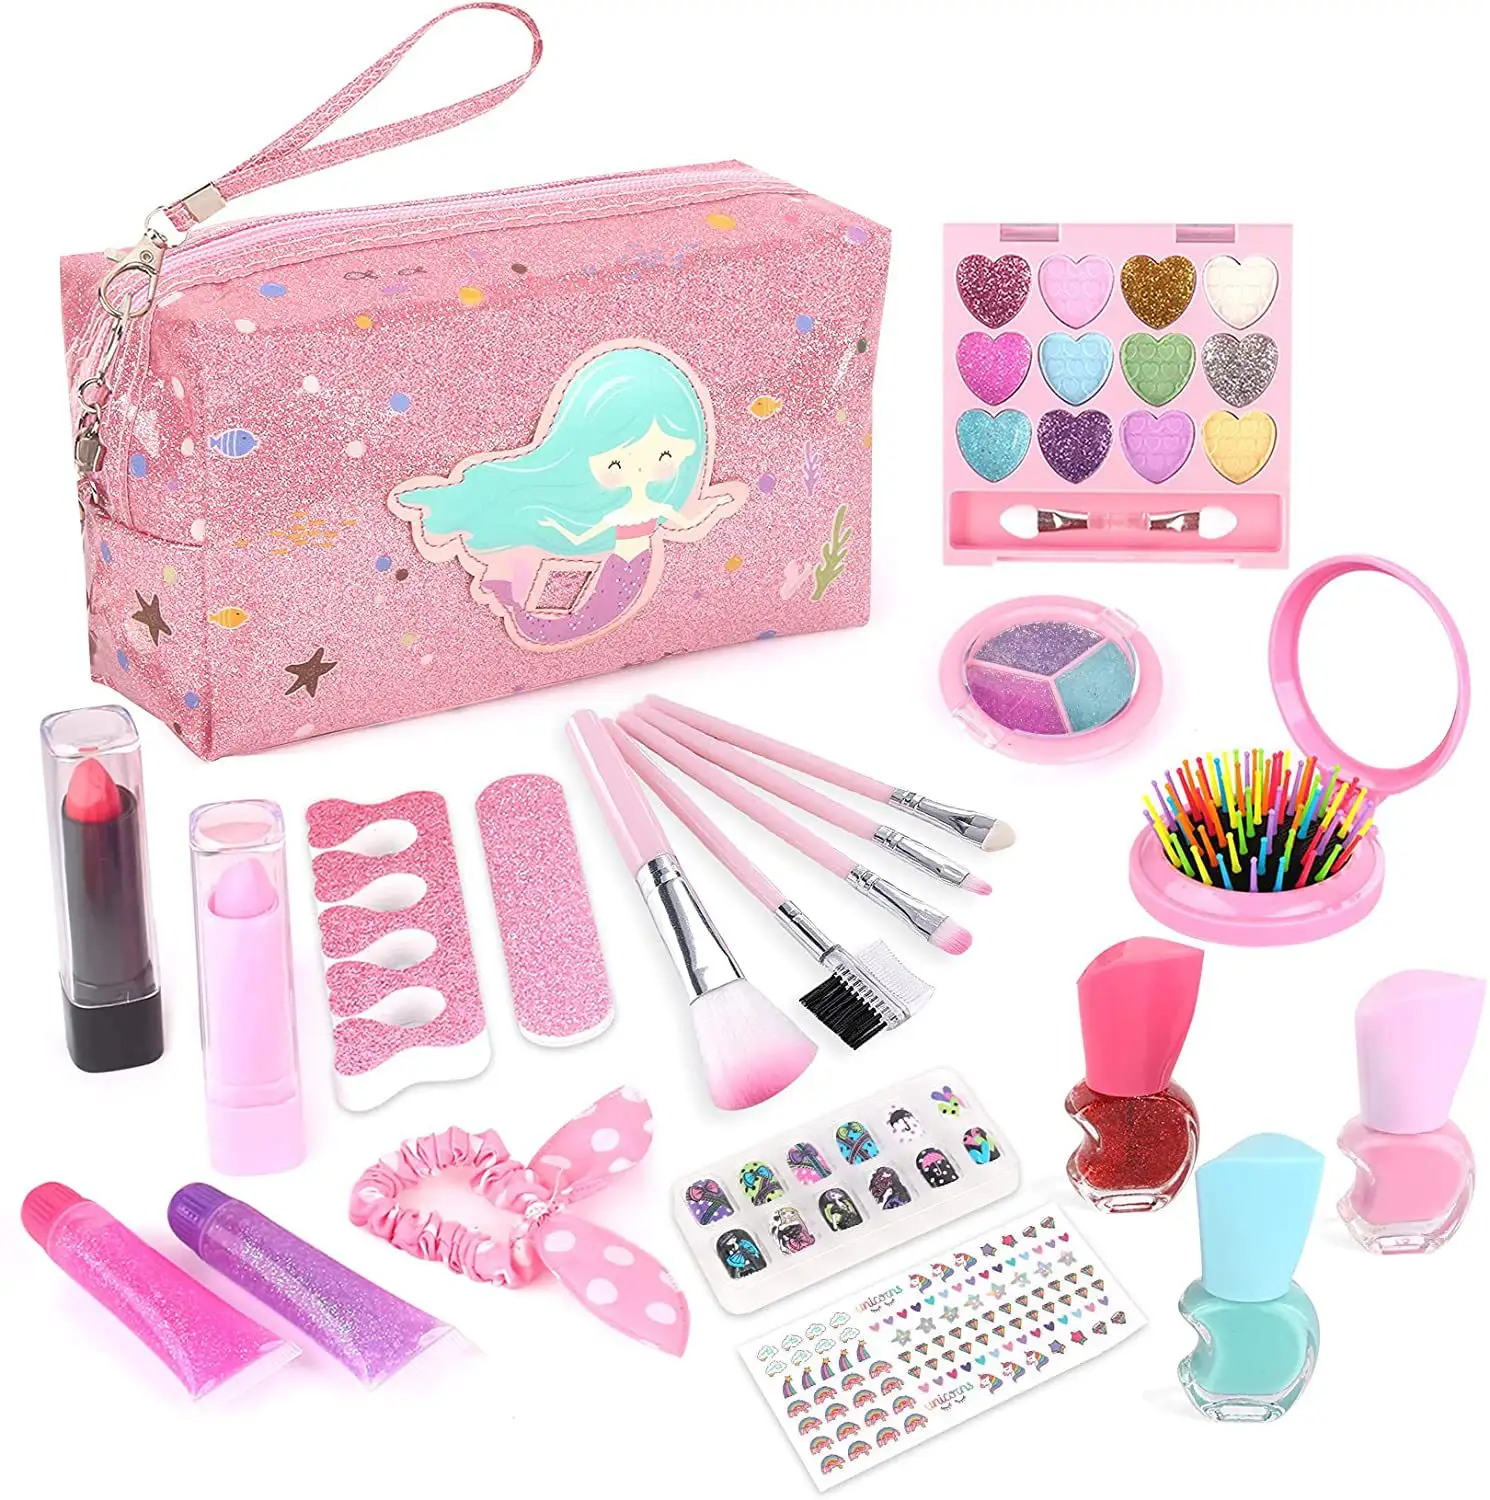 Kinder tragbare wasch bare Rollenspiel Beauty Makeup Nagellack Sets Make Up Kit Mädchen Spielzeug Juguetes de Belleza mit Kosmetik tasche